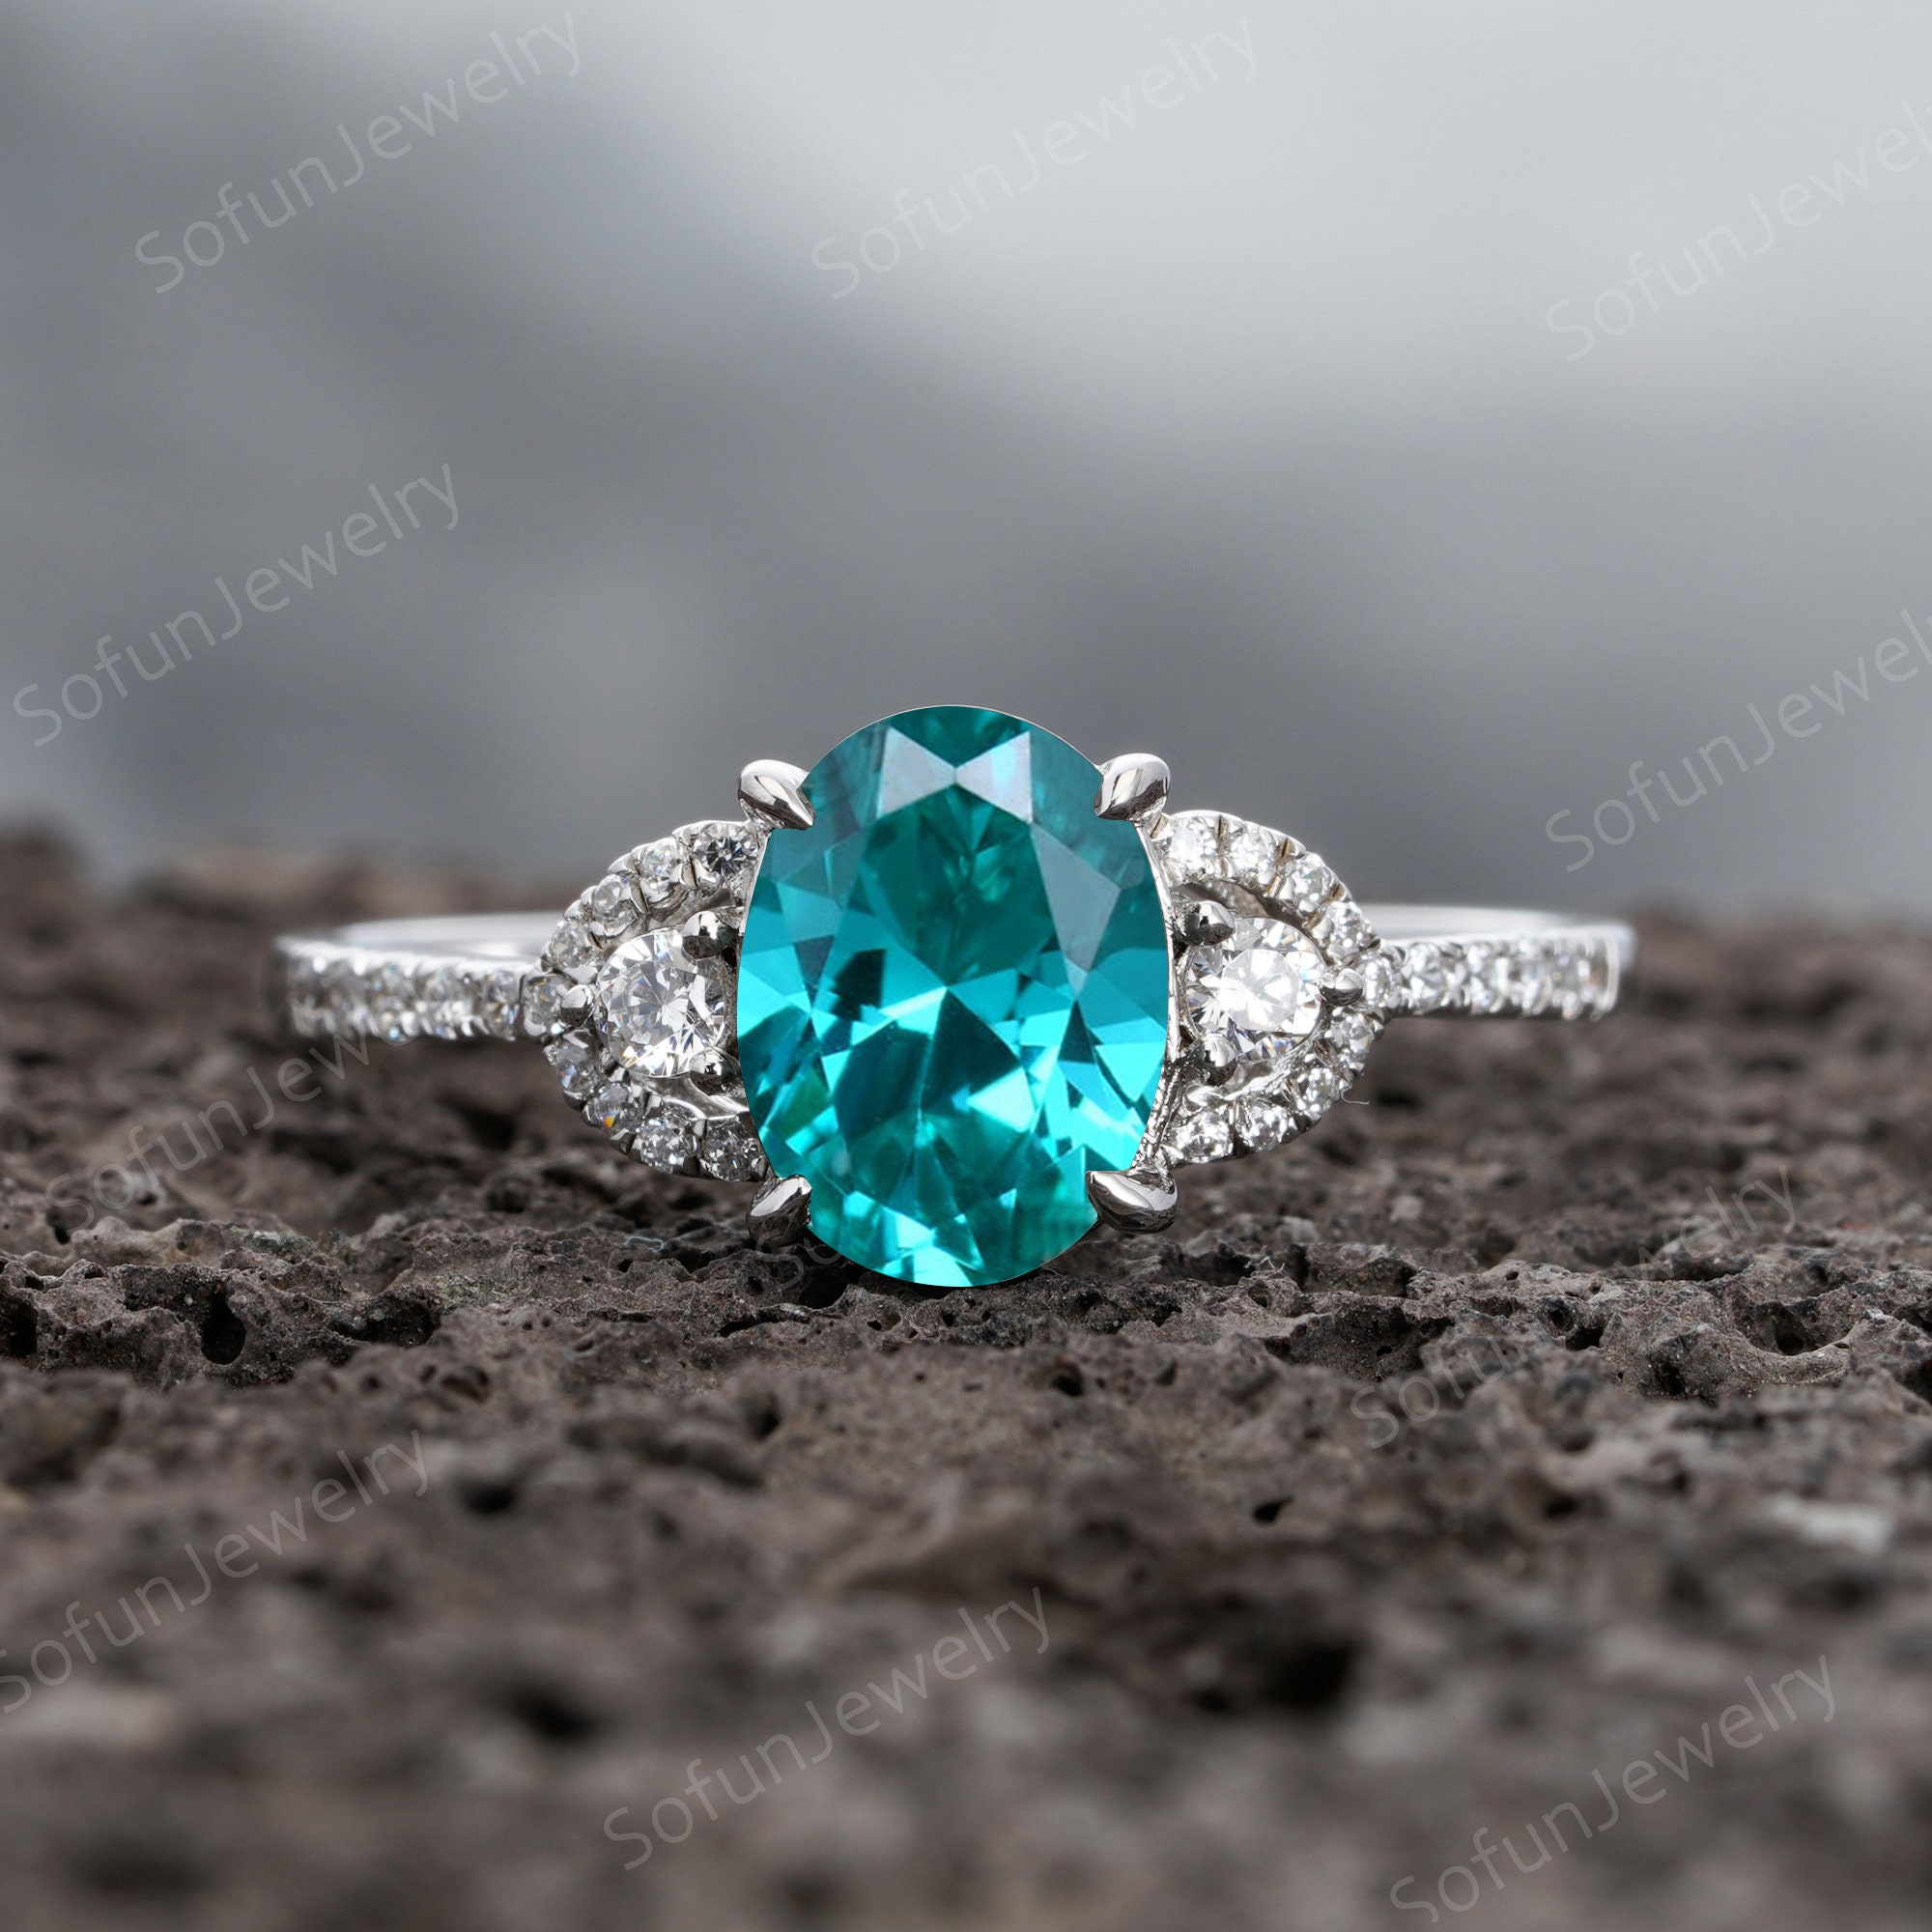 Paraiba Tourmaline Engagement Ring/ Blue Tourmaline Rings/ 1CT Oval Cut Tourmaline  Rings/ Low Profile Tourmaline Wedding Ring/ Diamond Rings - Etsy